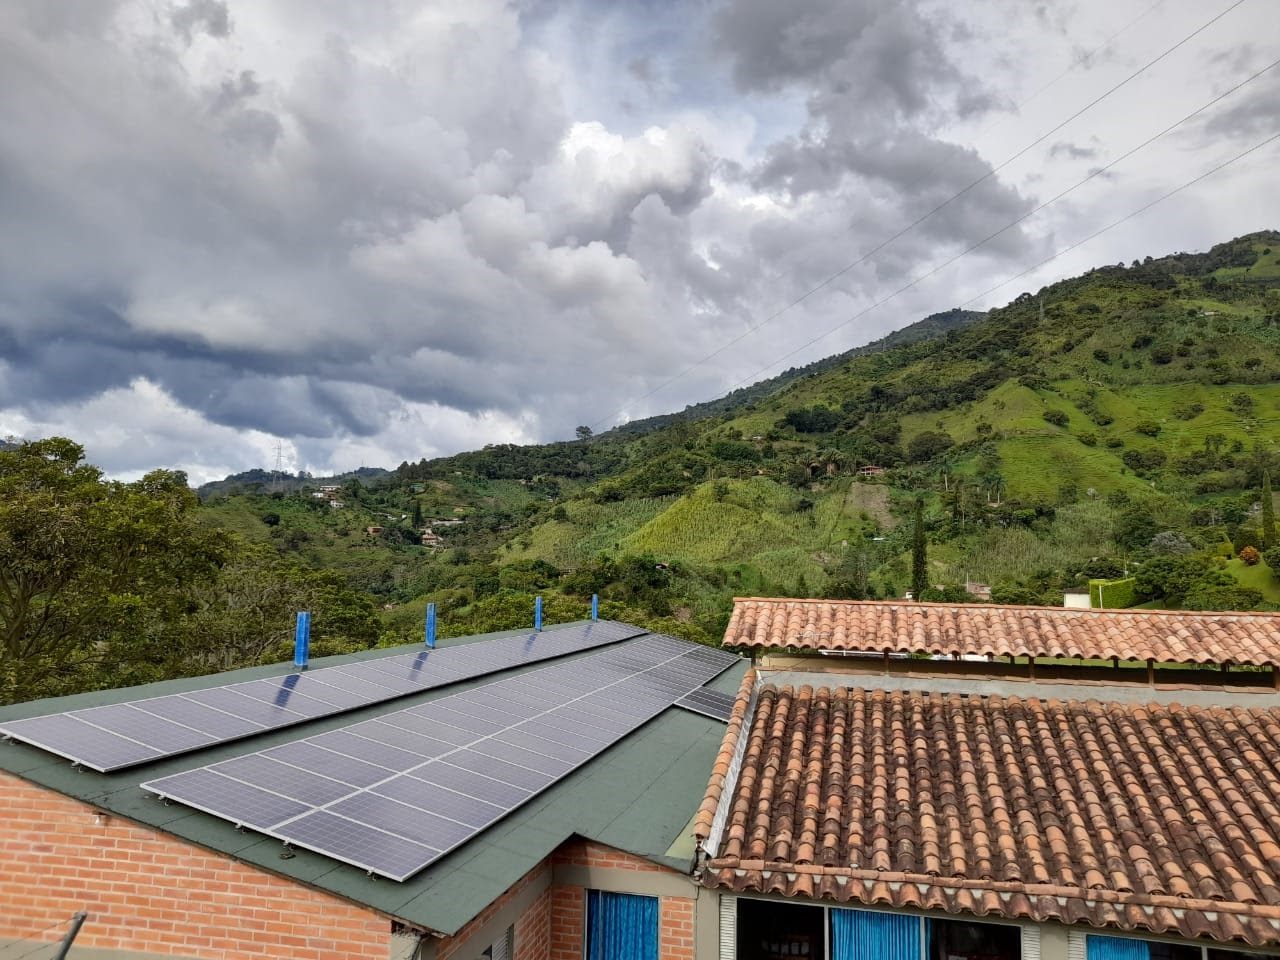  Habitantes de calle se beneficiarán de paneles solares en Medellin